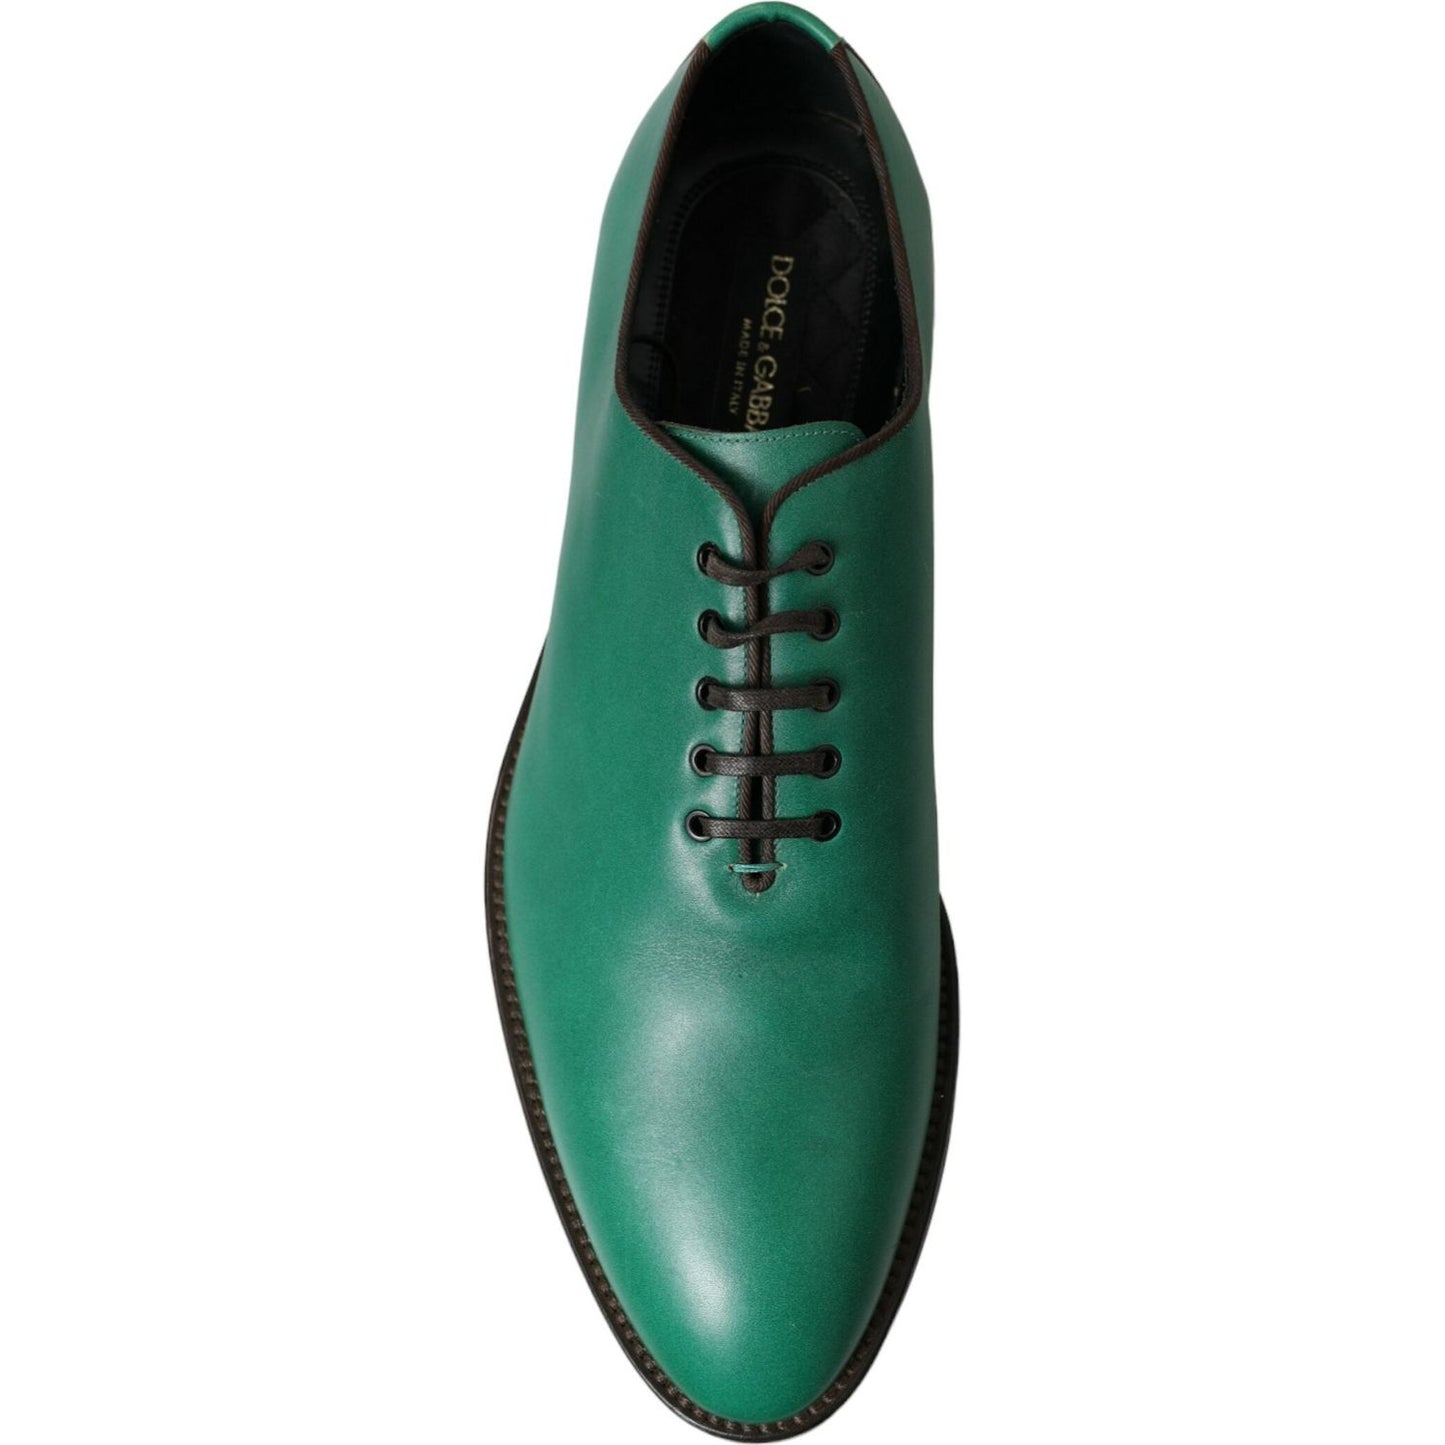 Dolce & Gabbana Elegant Green Leather Oxford Dress Shoes green-leather-lace-up-oxford-dress-shoes